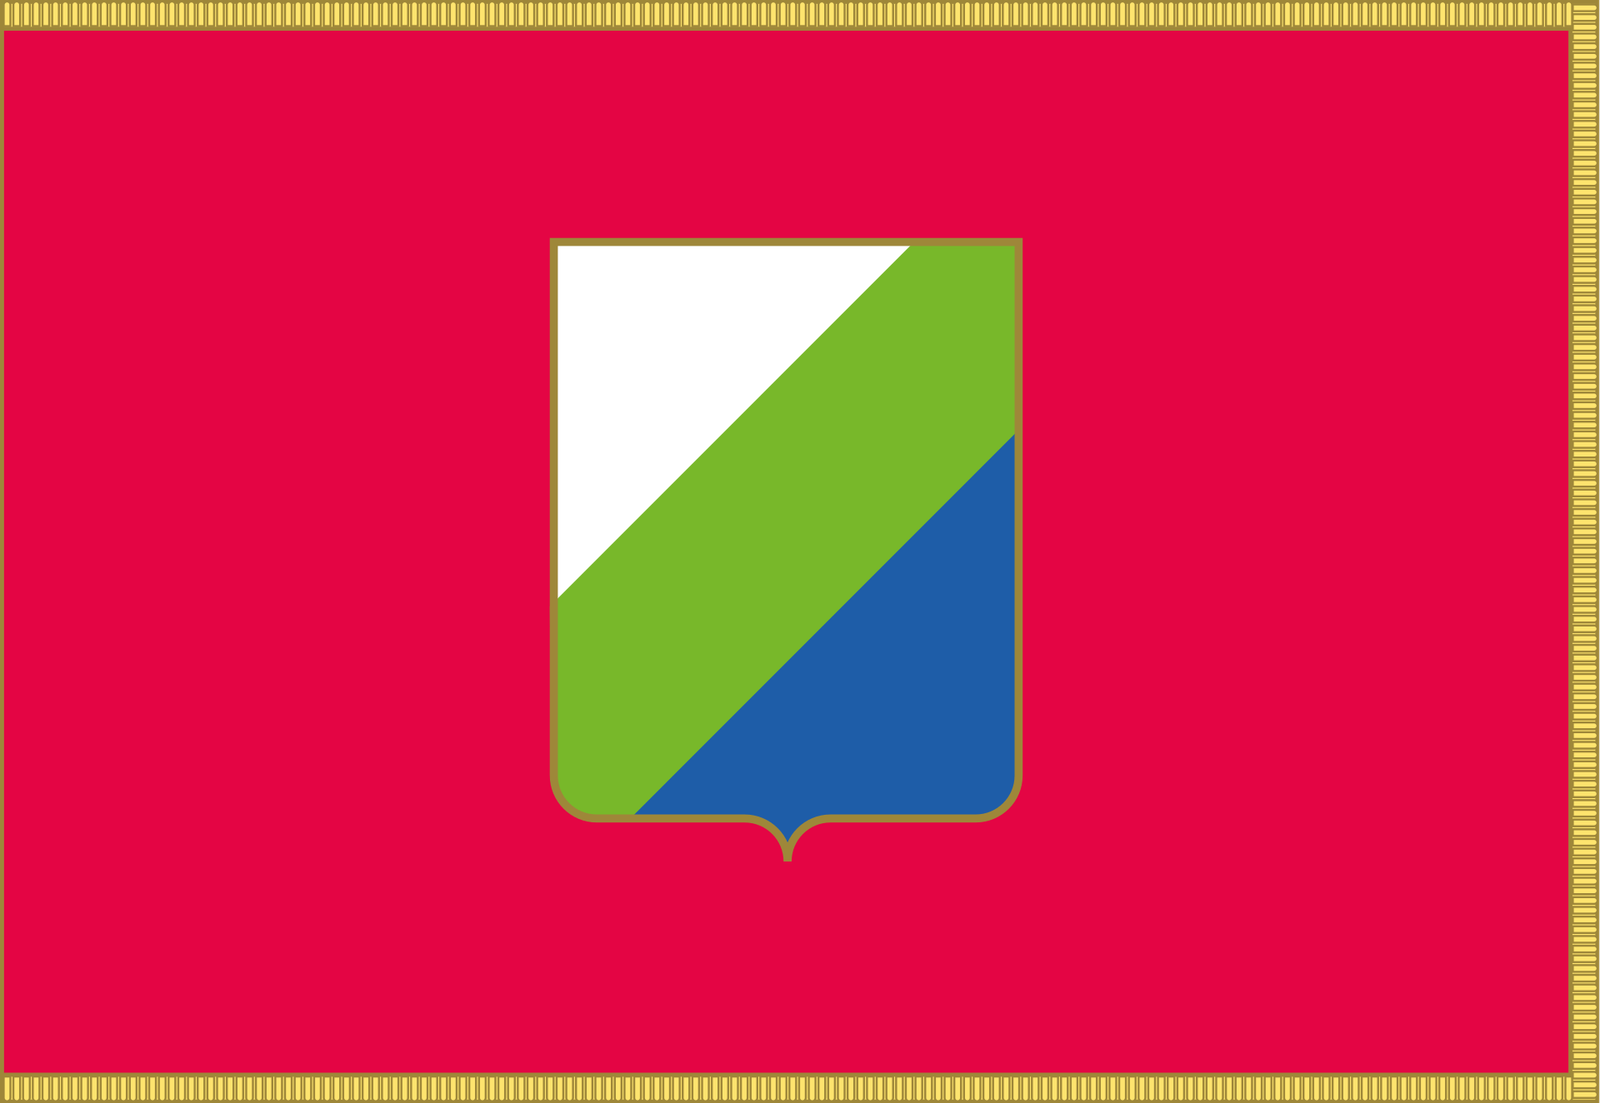 Flag of Abruzzo